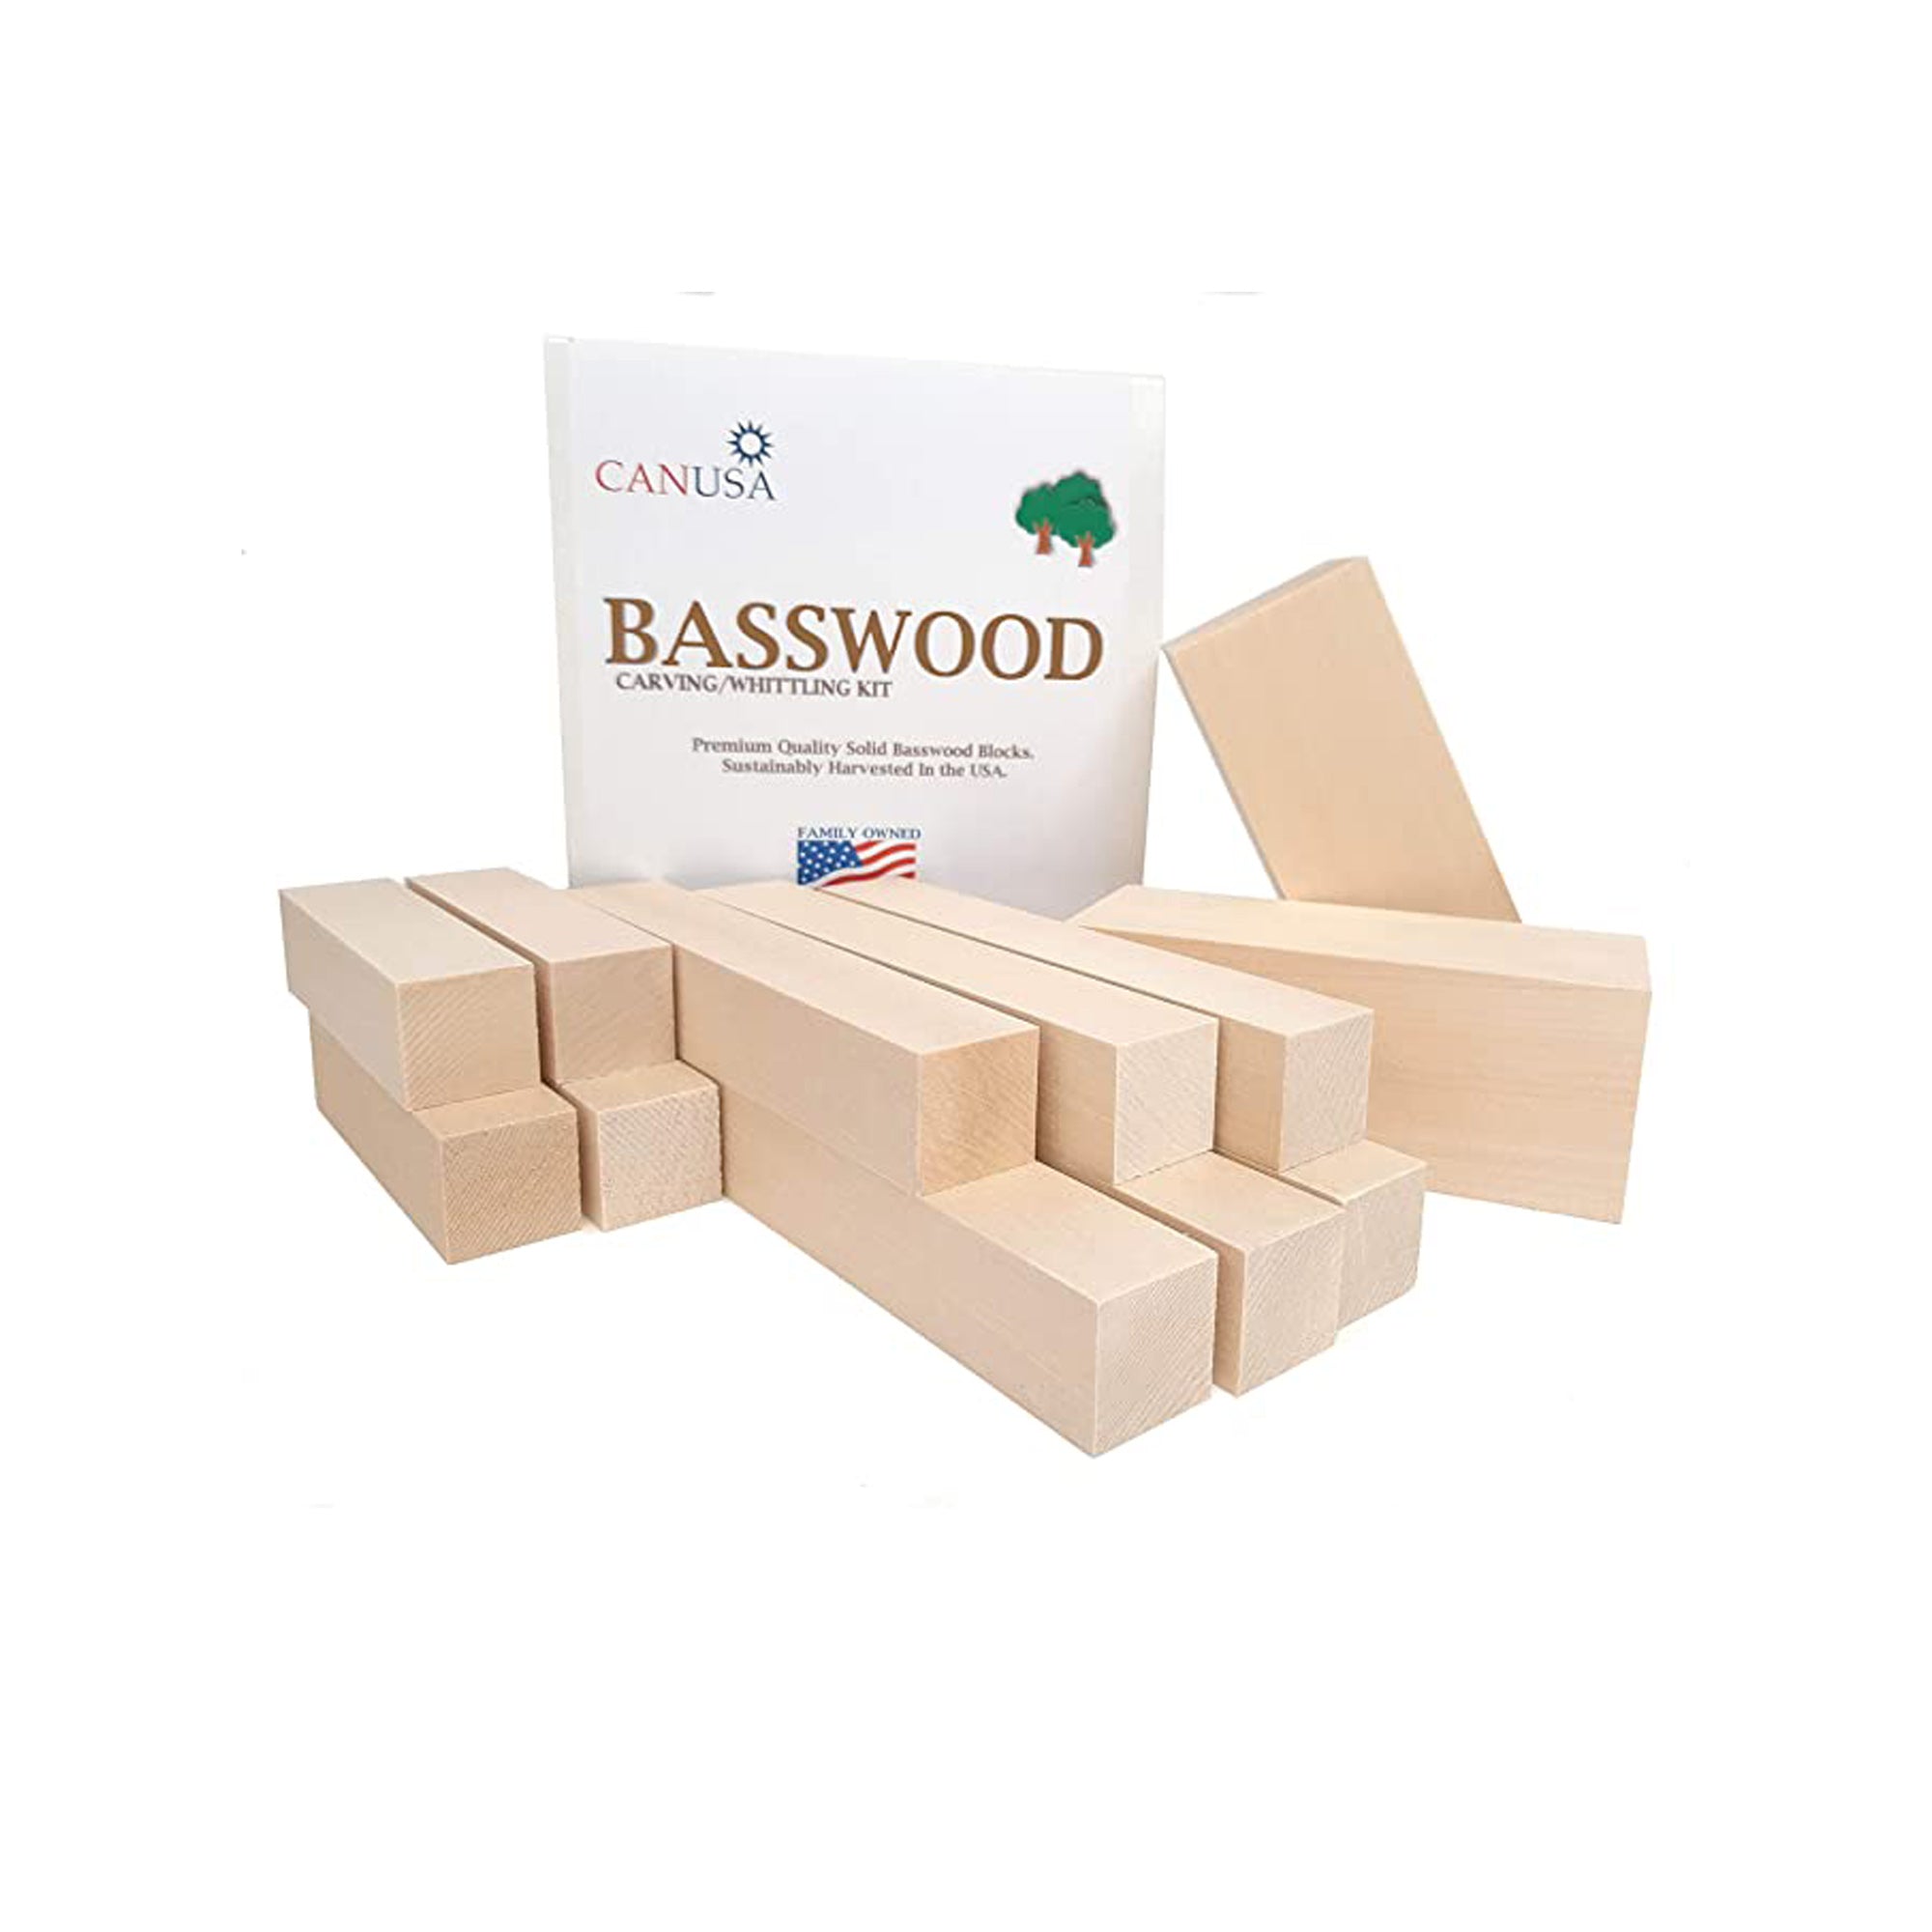 HINOKI WOOD WHITTLING KIT - Shop zadiowood Wood, Bamboo & Paper